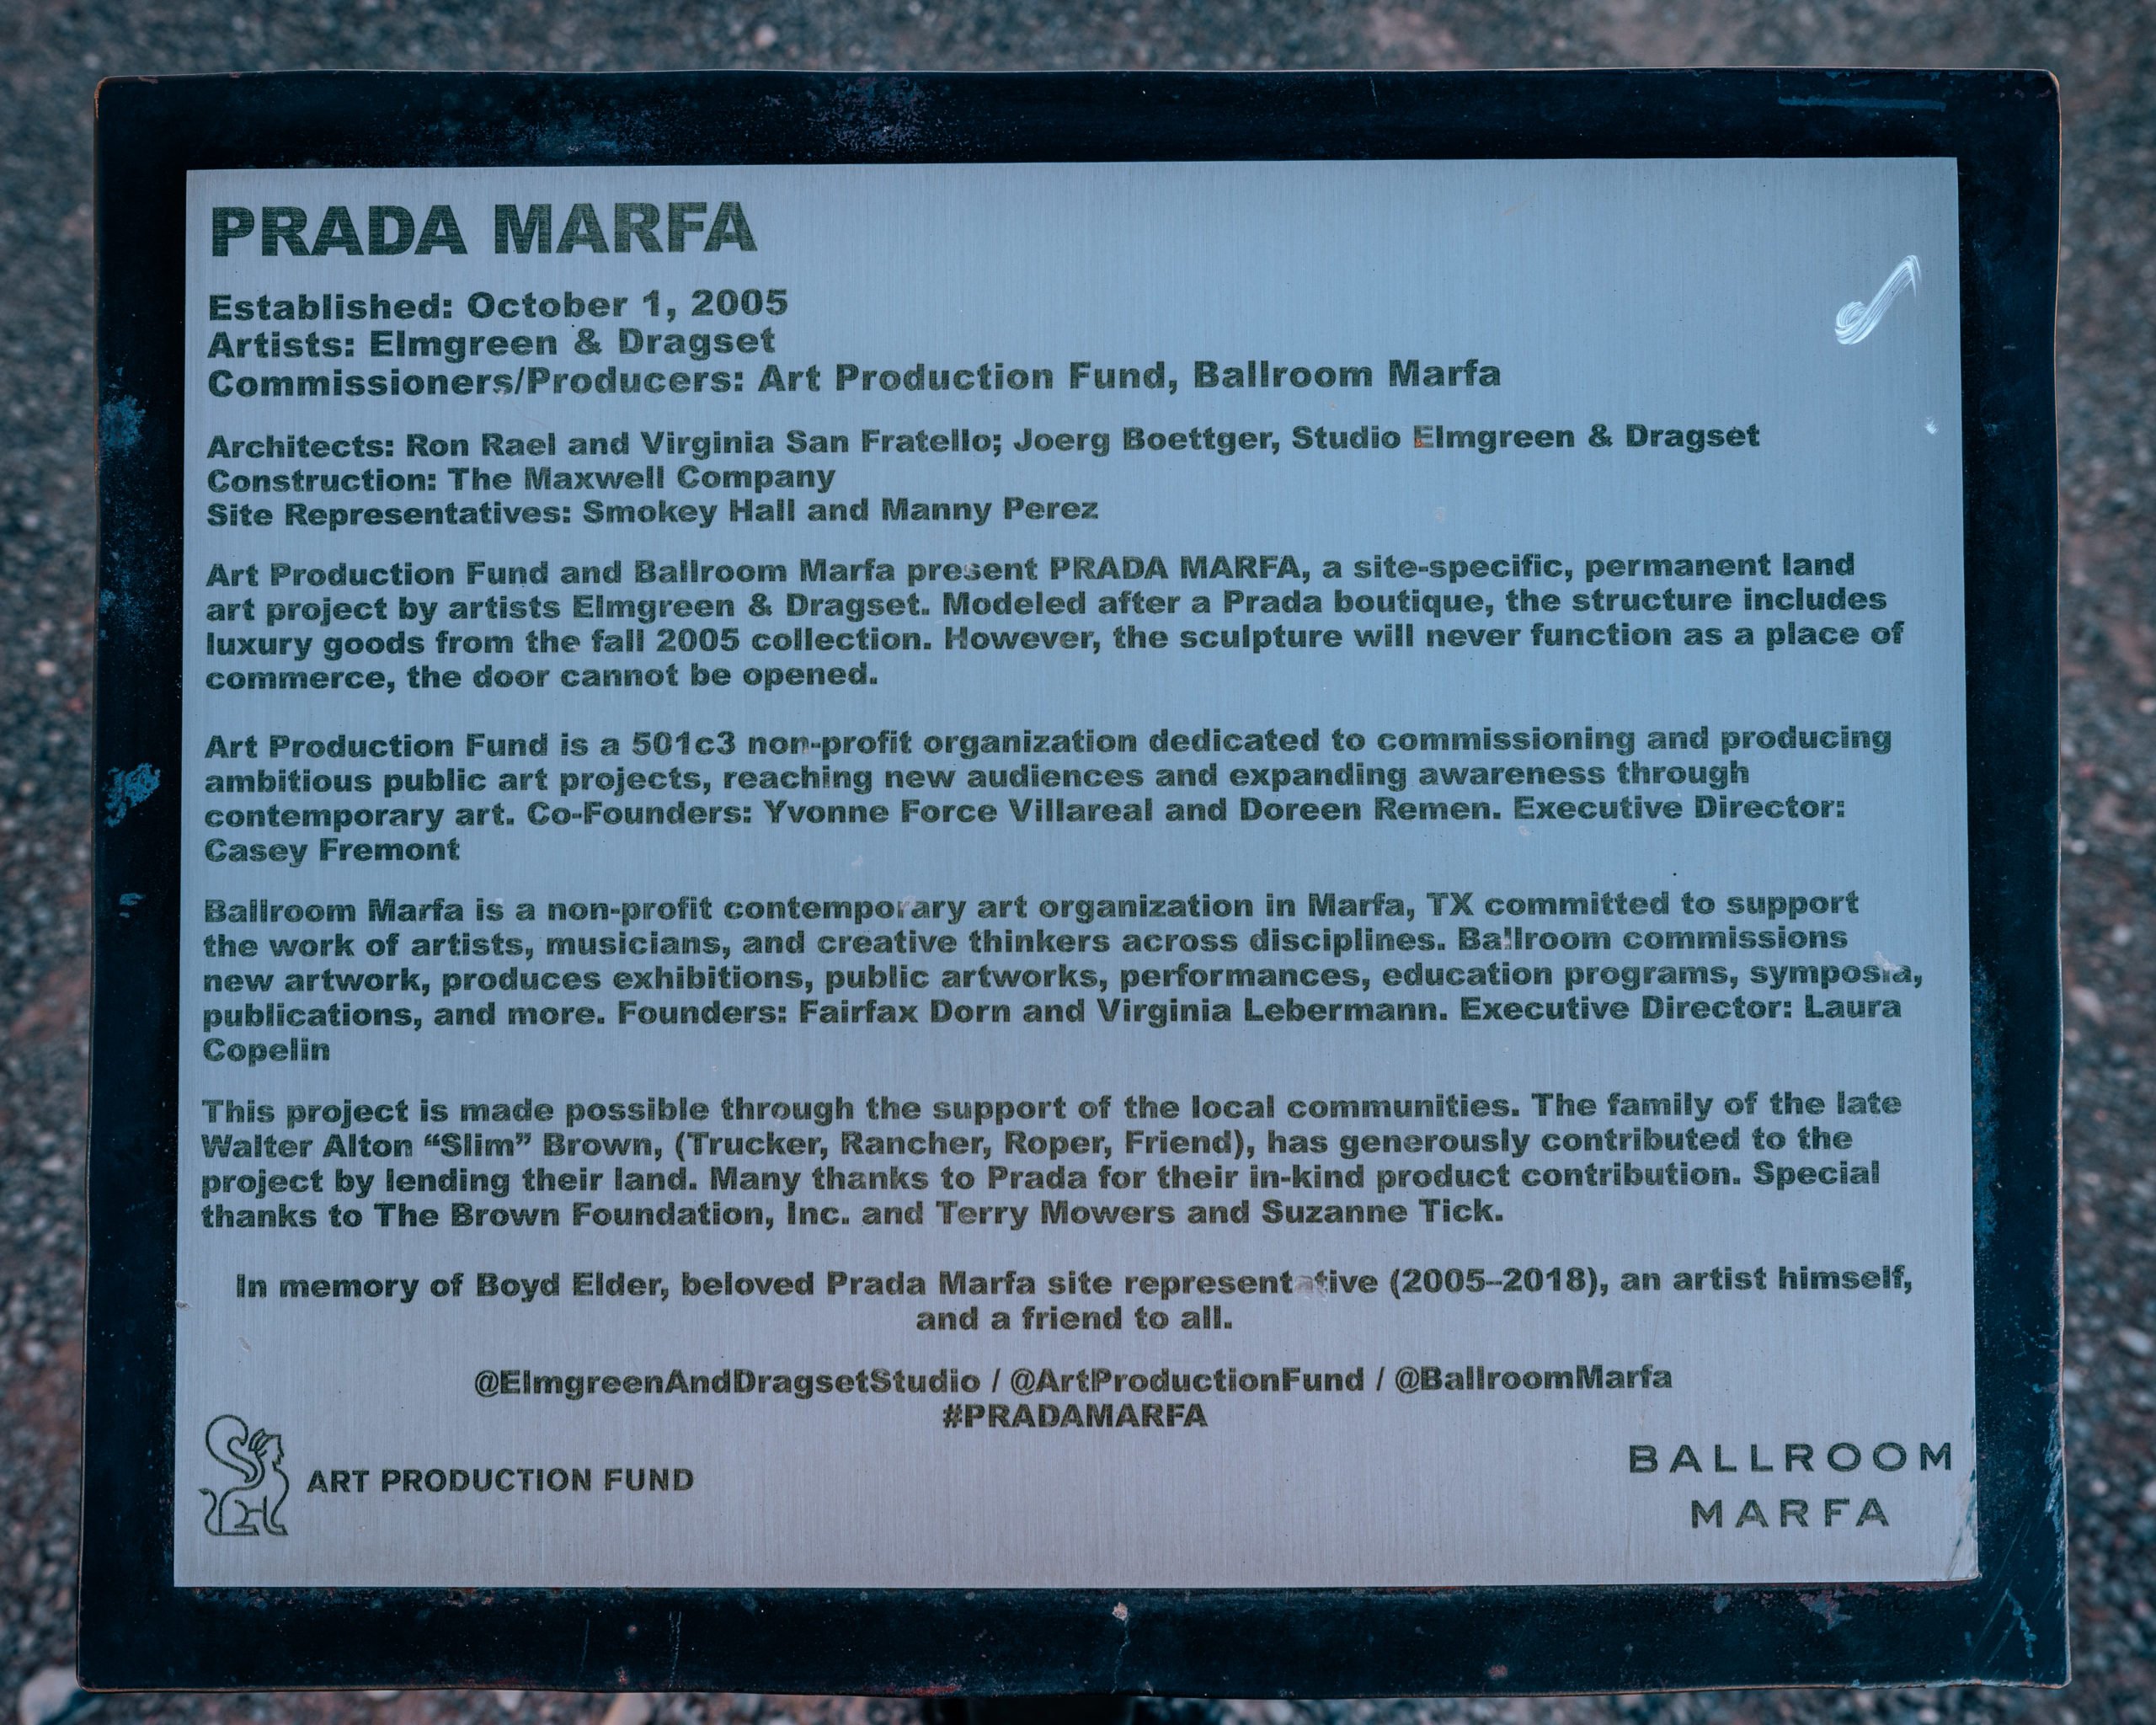 Prada Marfa information plaque